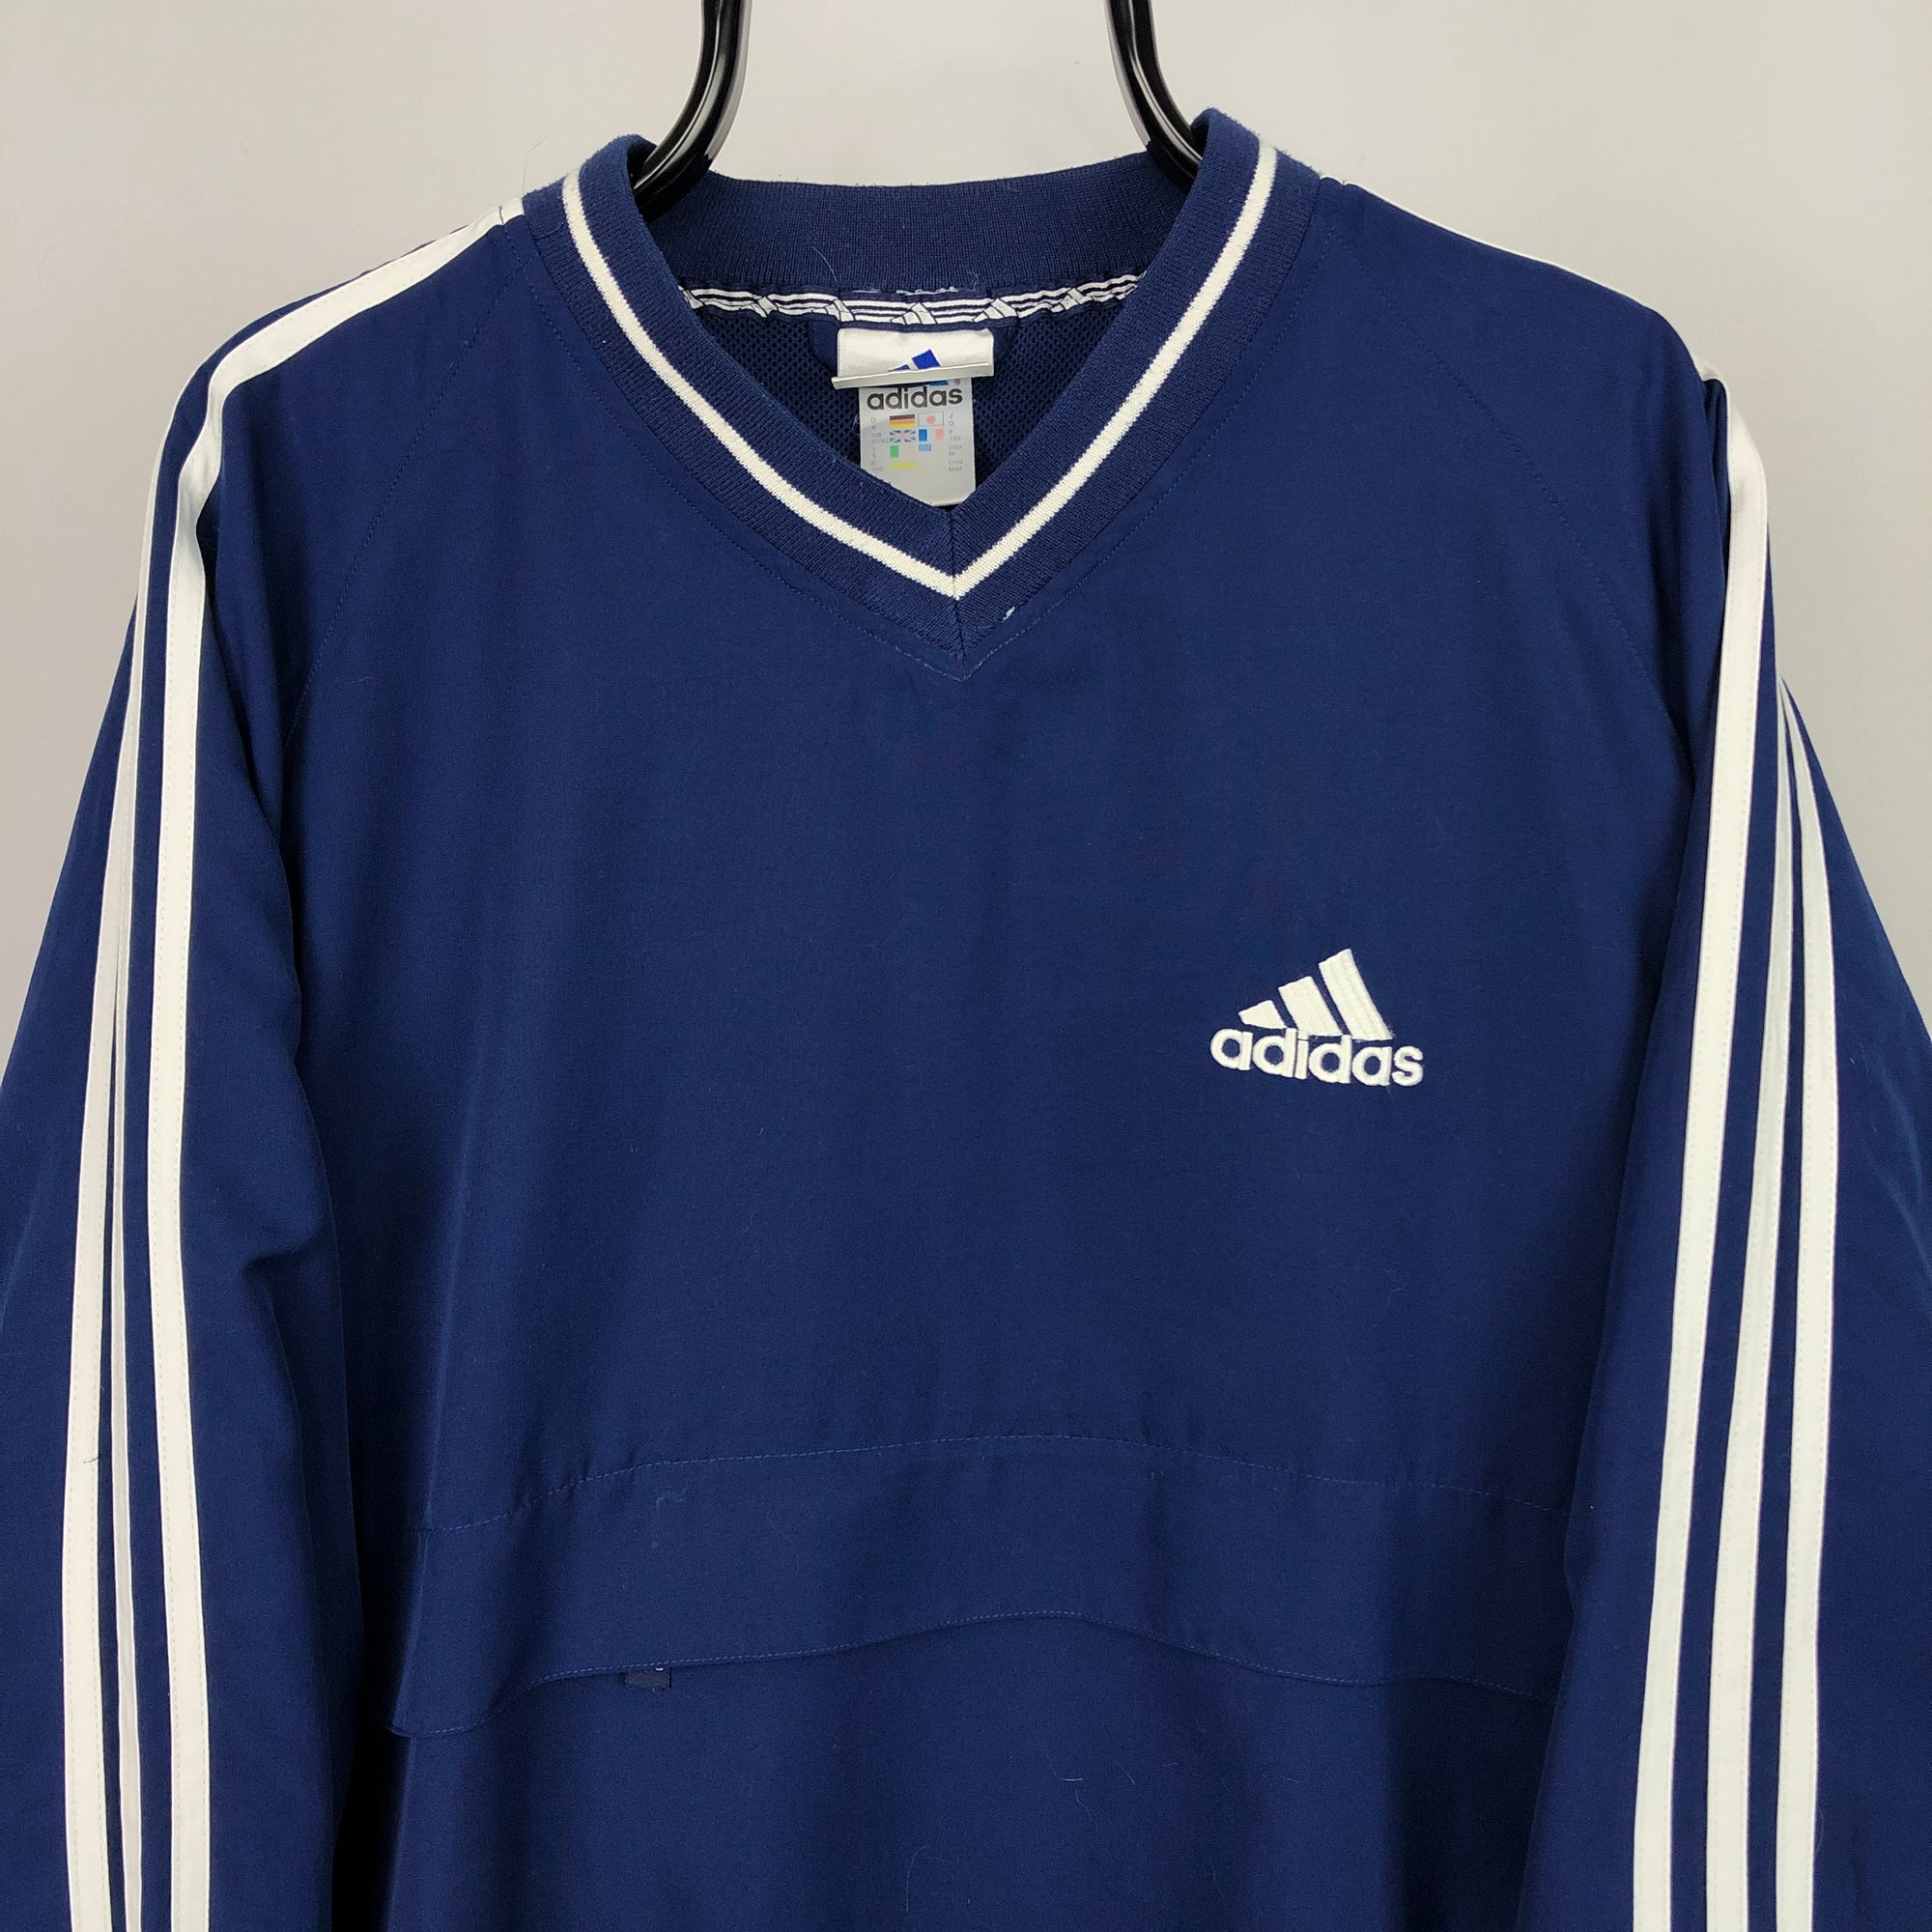 Vintage 90s Adidas Nylon Sweatshirt in Navy/White - Men's Large/Women's XL